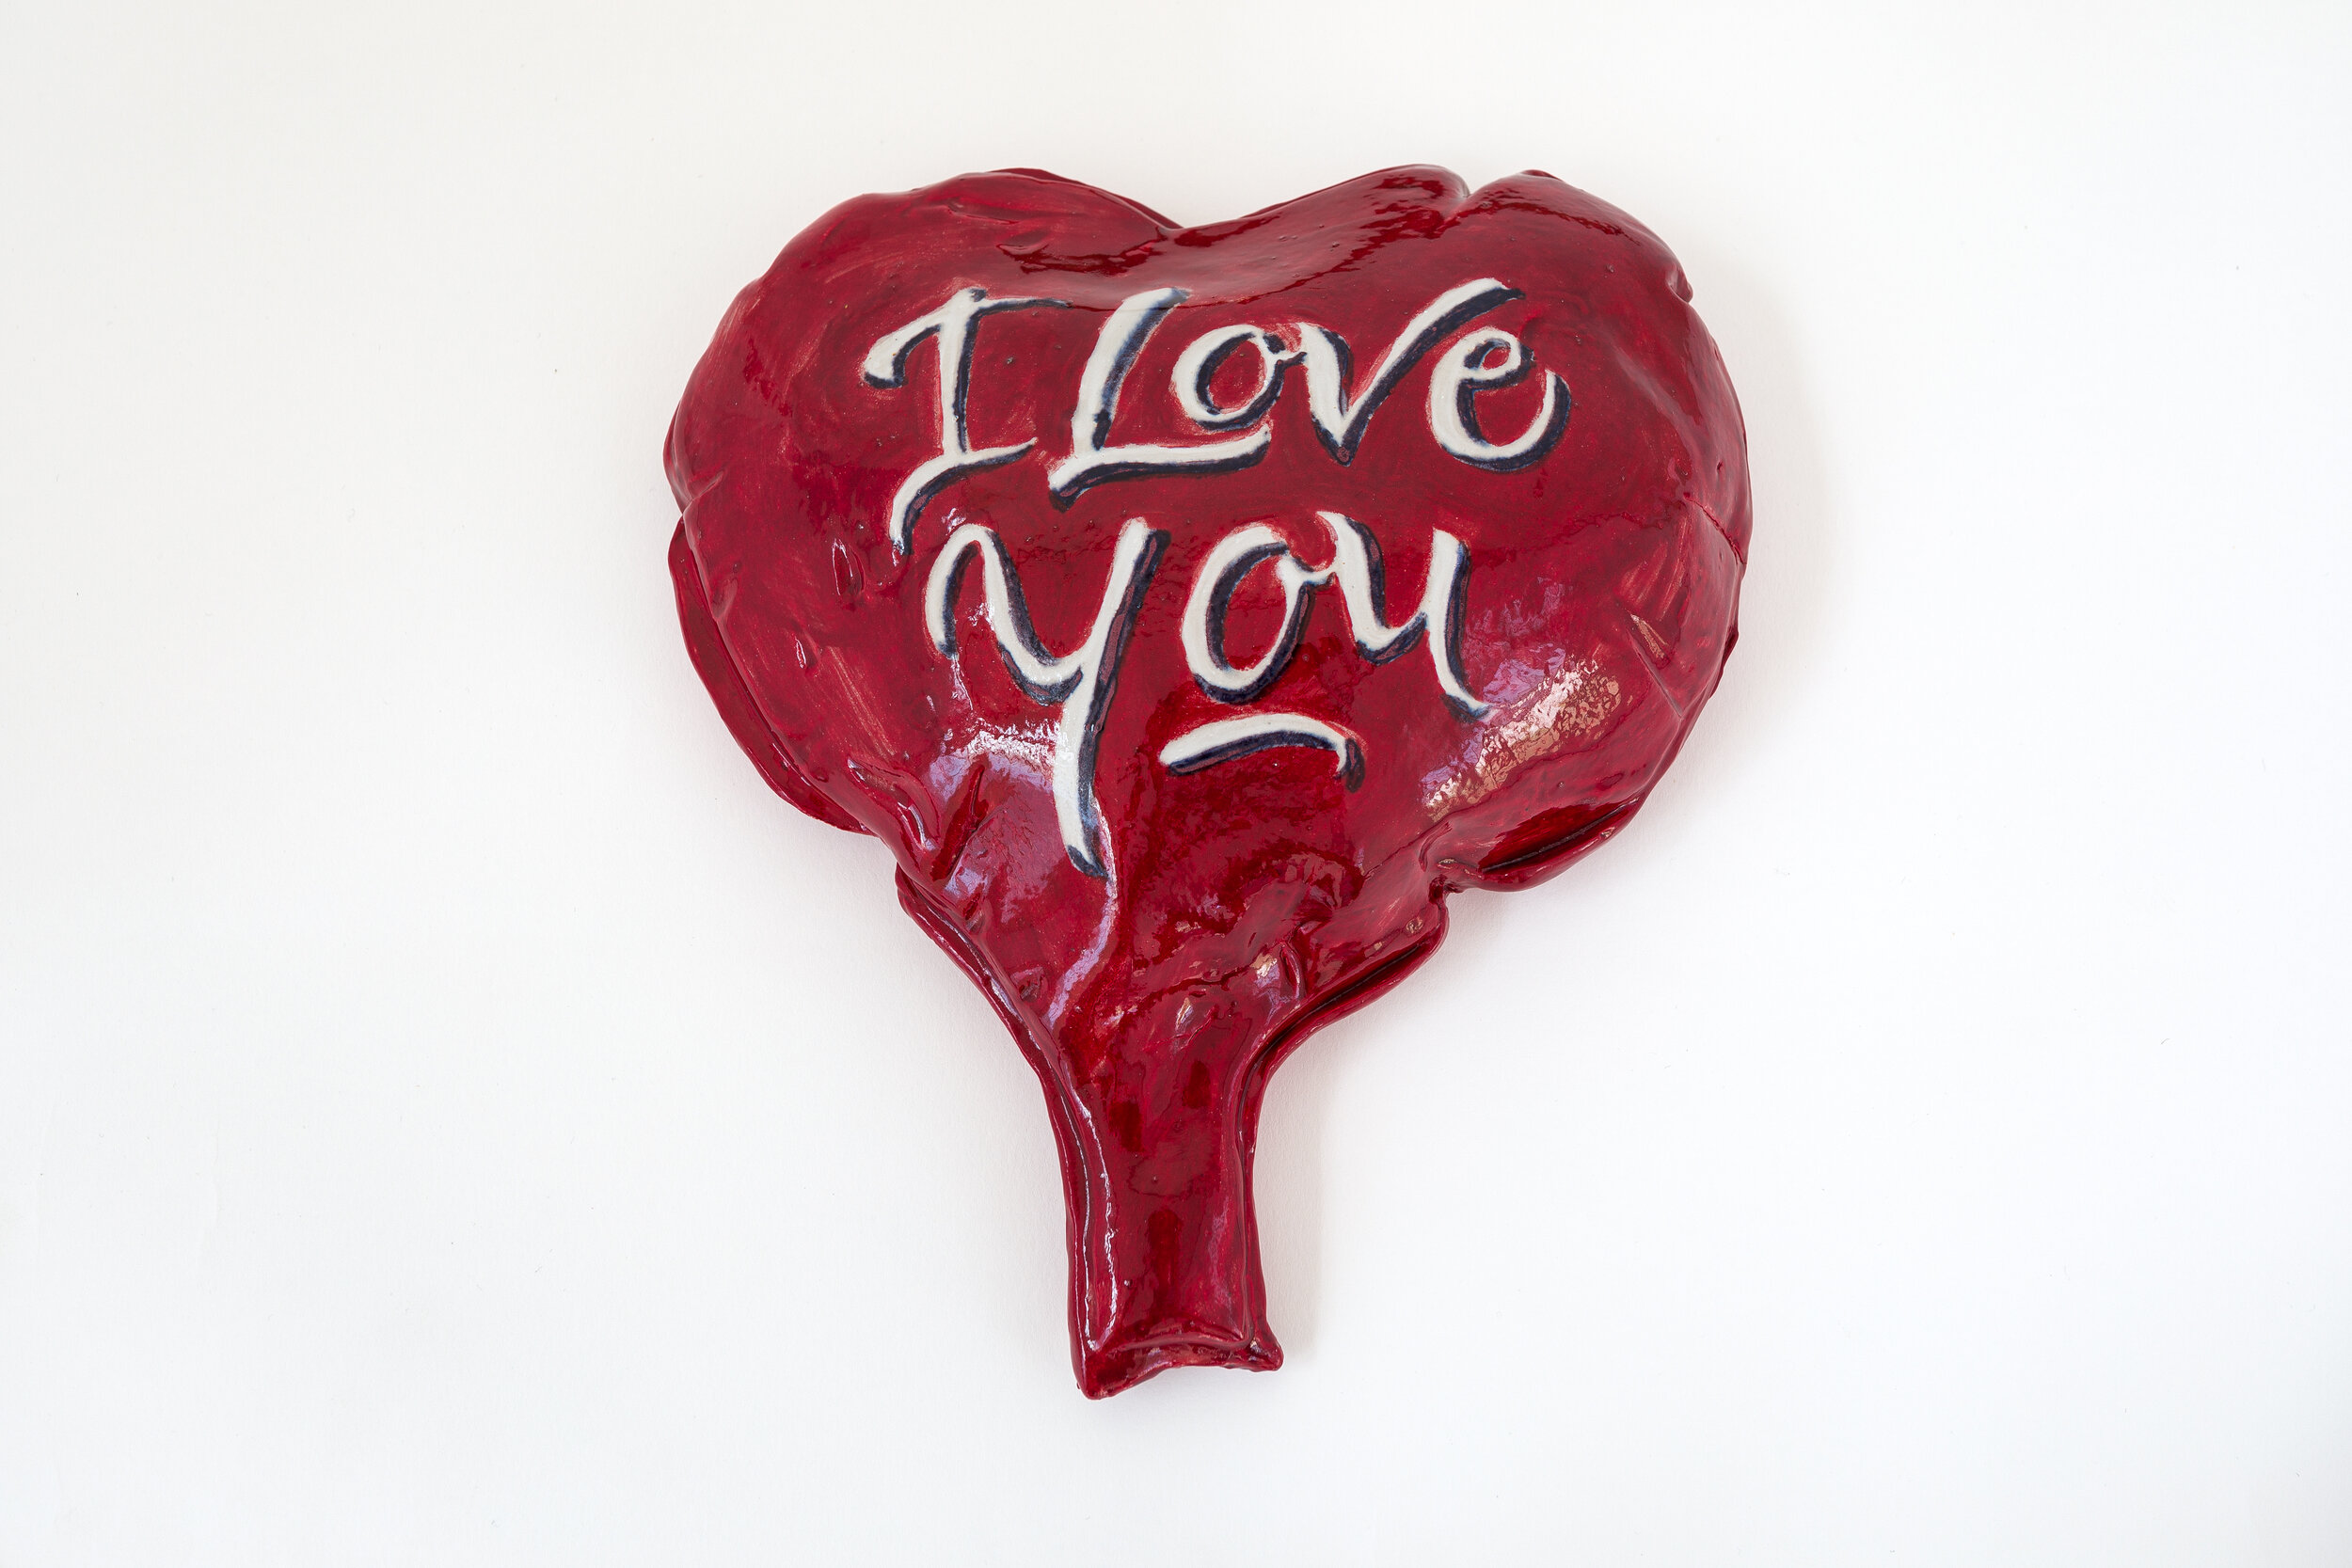 Deflated 'I Love You' Balloon